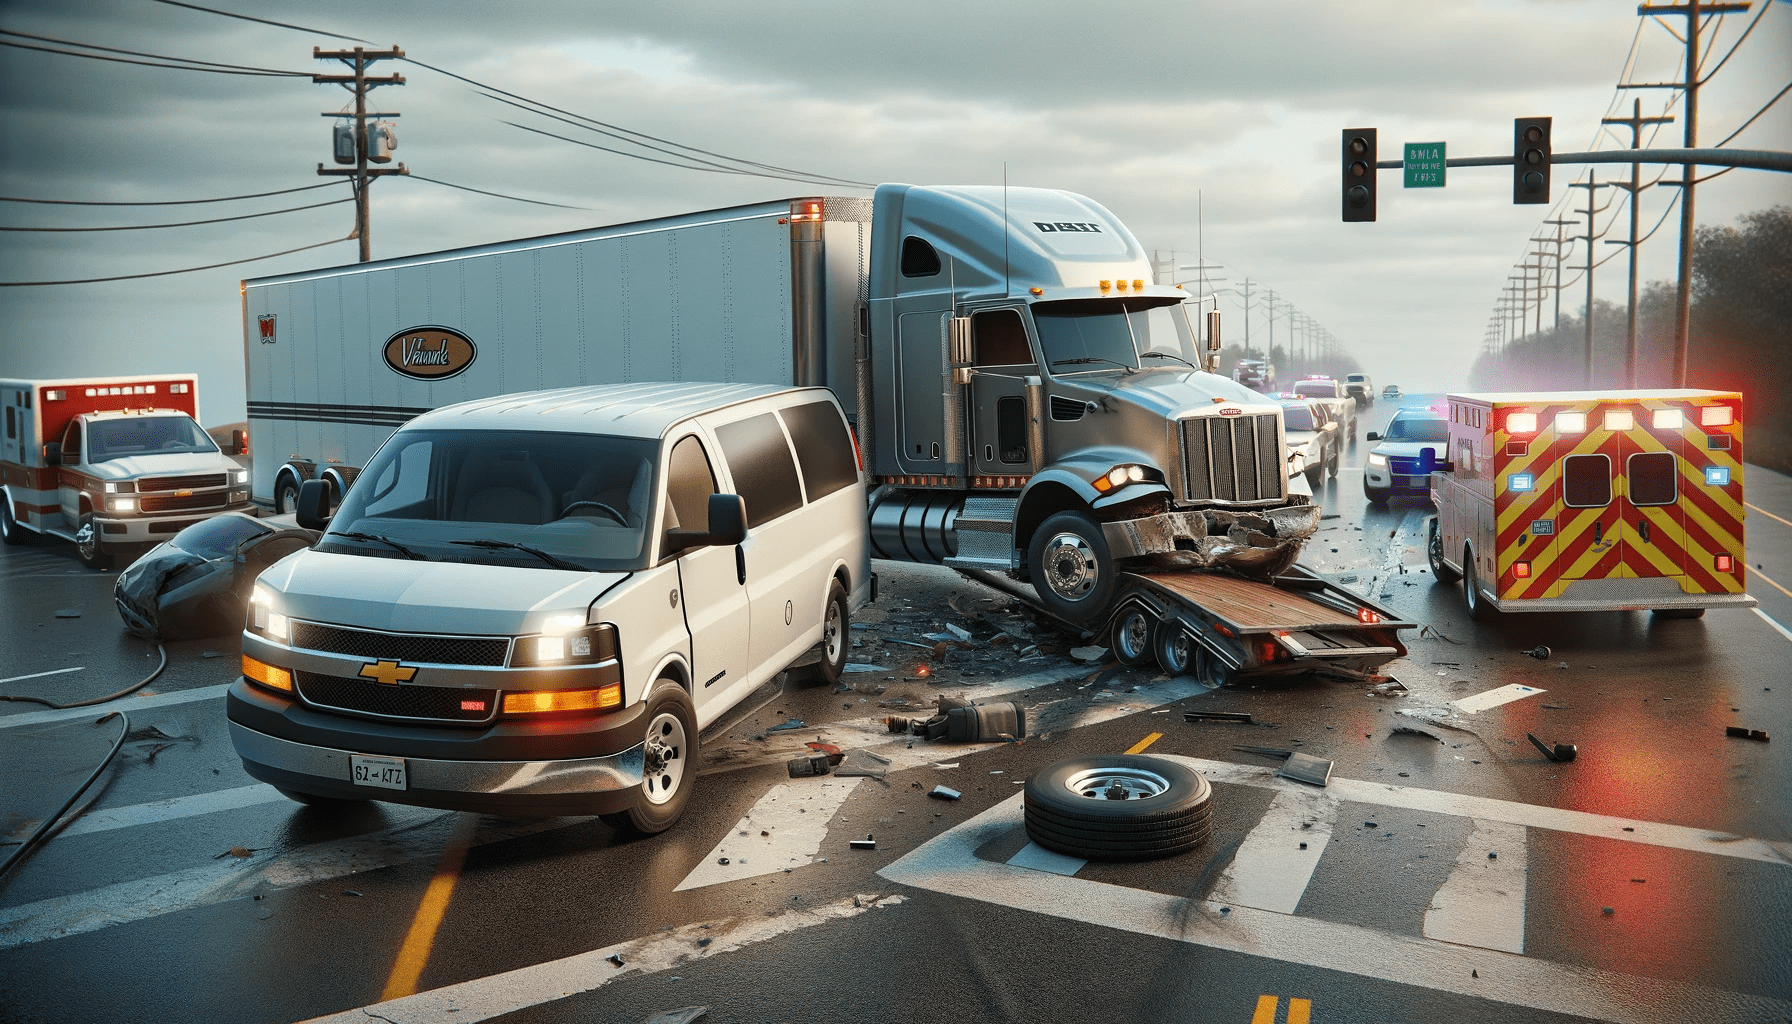 Chevy Van and Peterbilt truck crash or accident